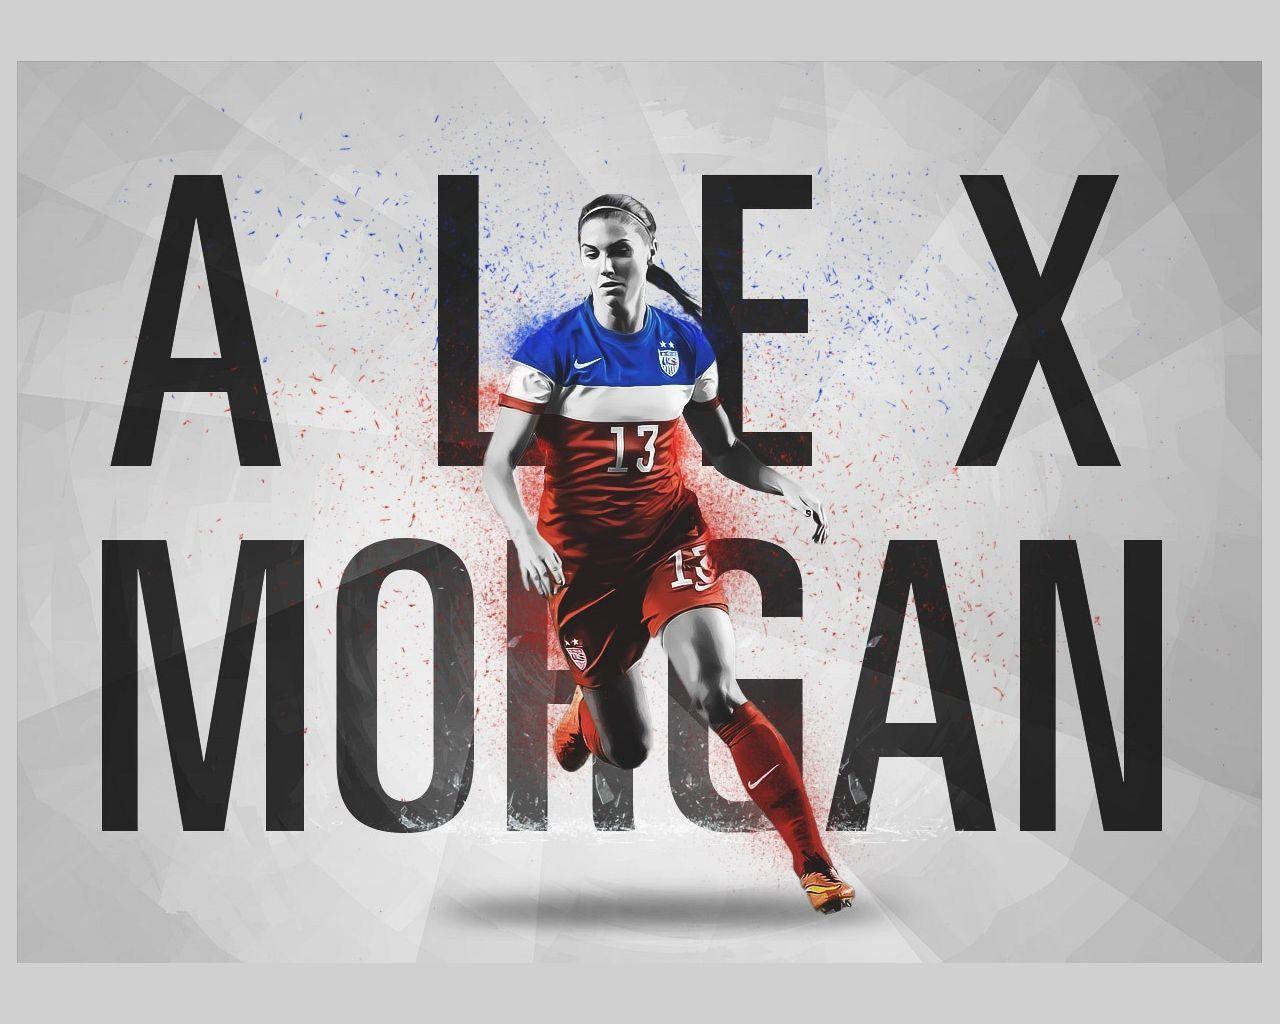 Alex Morgan HD Wallpaper & Picture. Image, Photo, Background